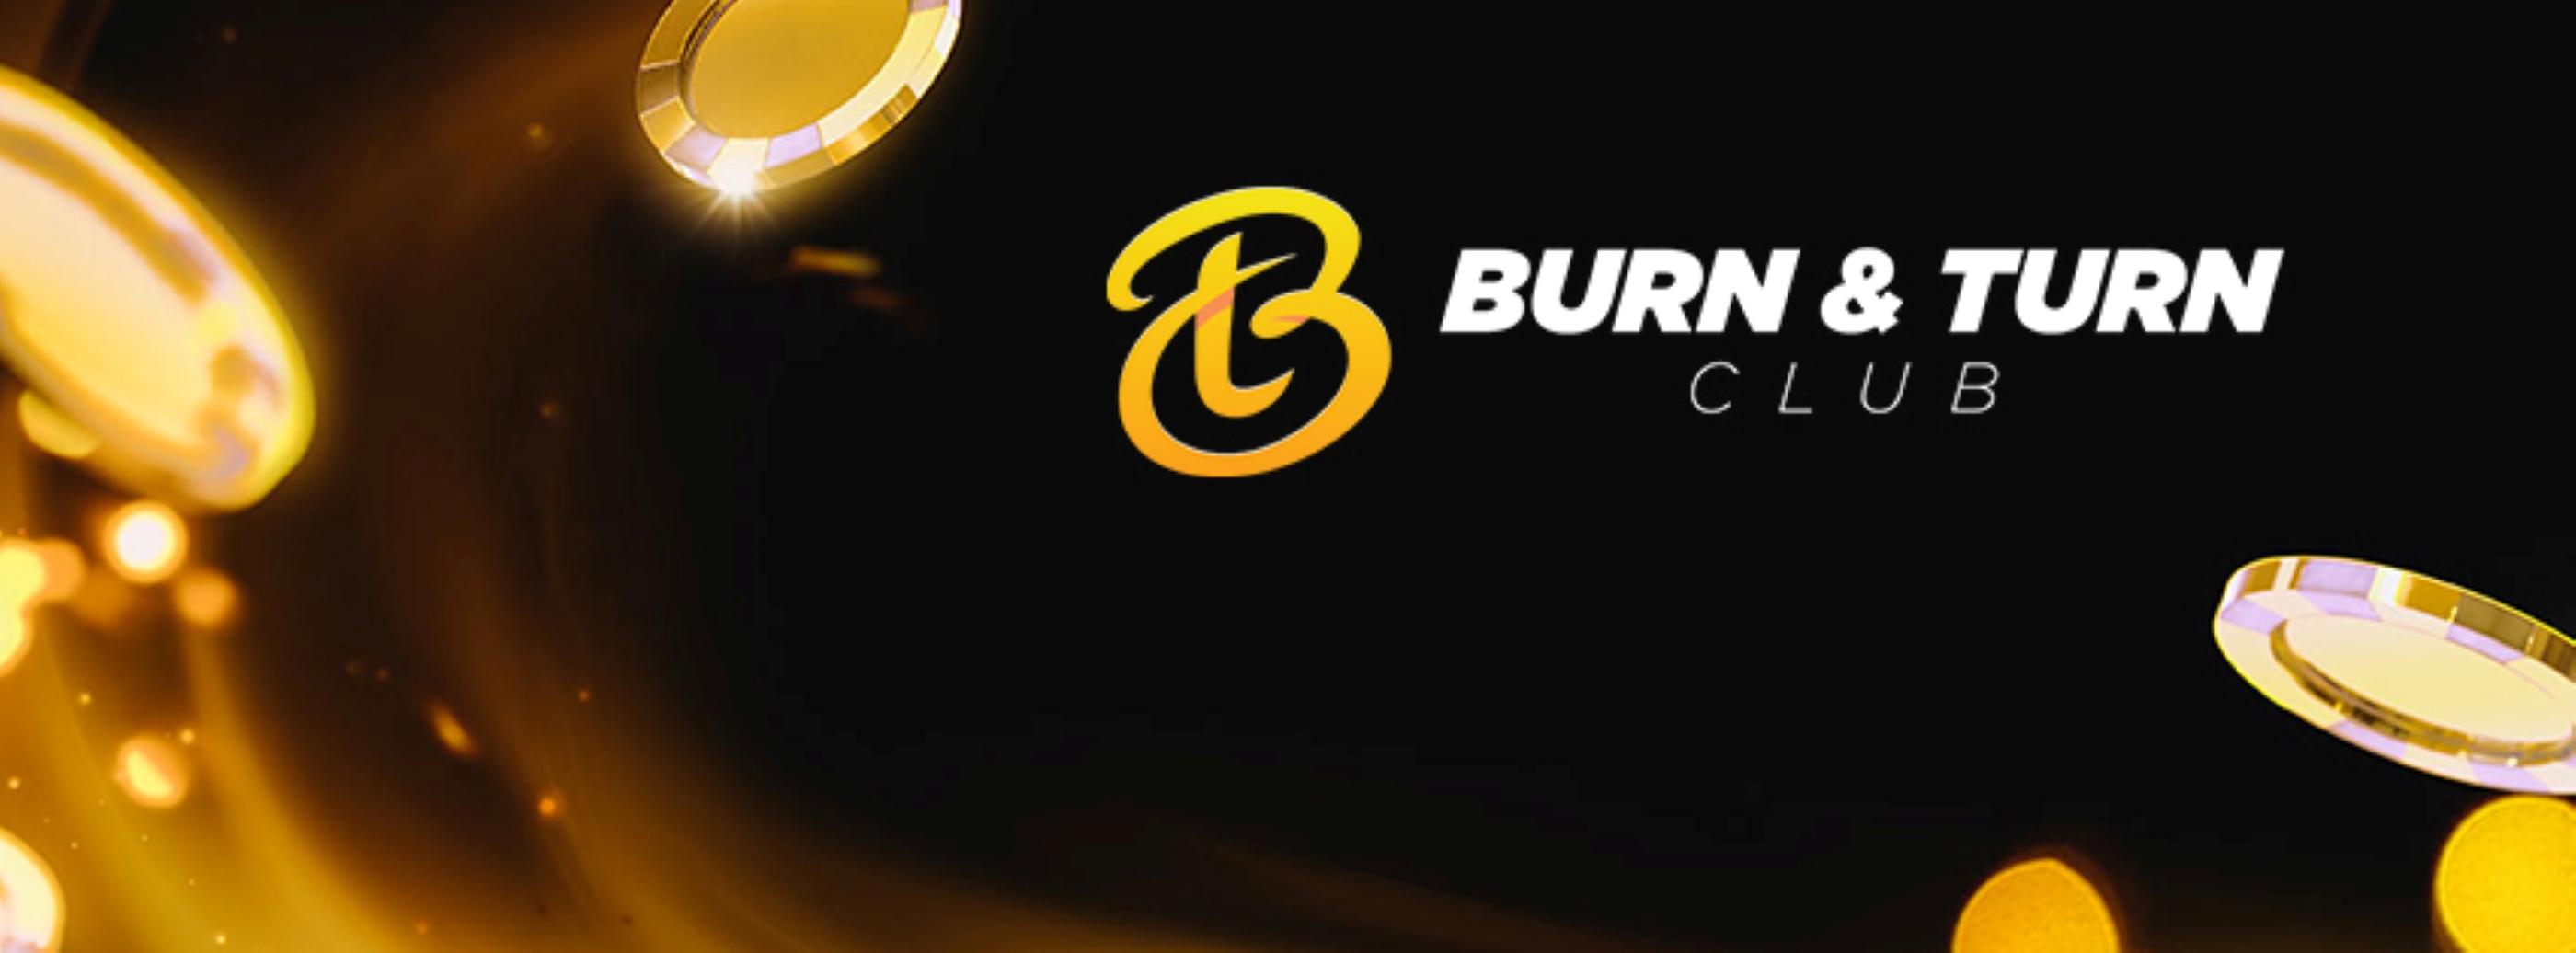 Burn and Turn Club Cover Image